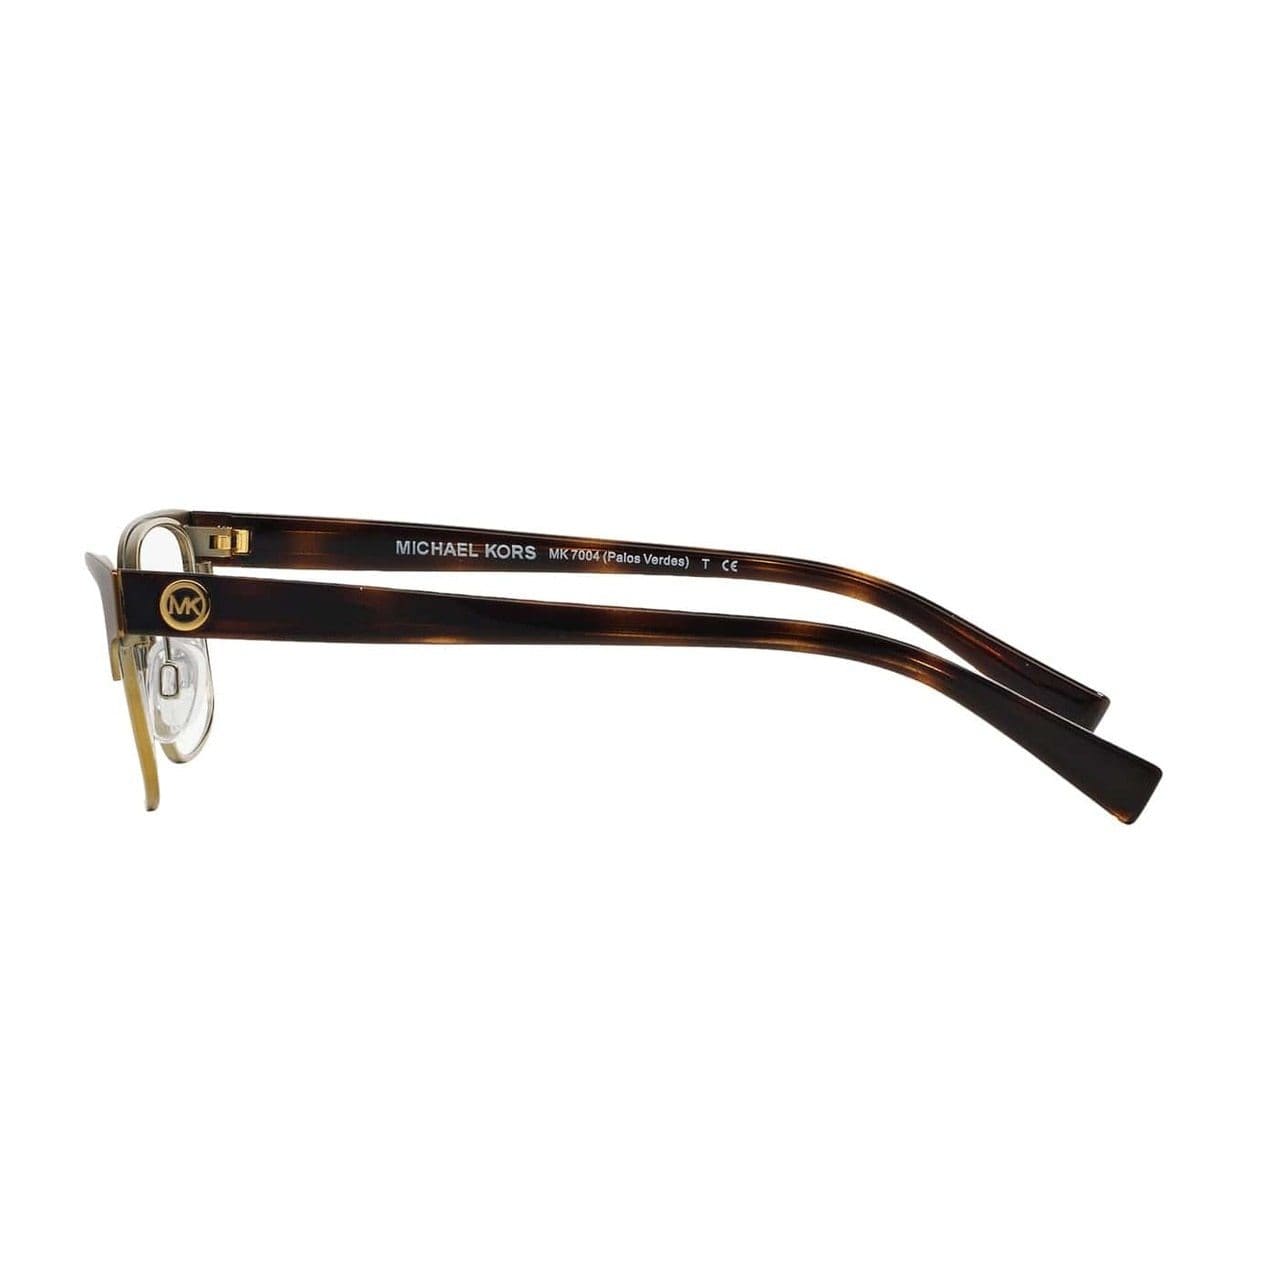 Michael Kors MK 7004-1029 Palos Verdes Brown Gold Rectangular Metal Eyeglasses 725125950060